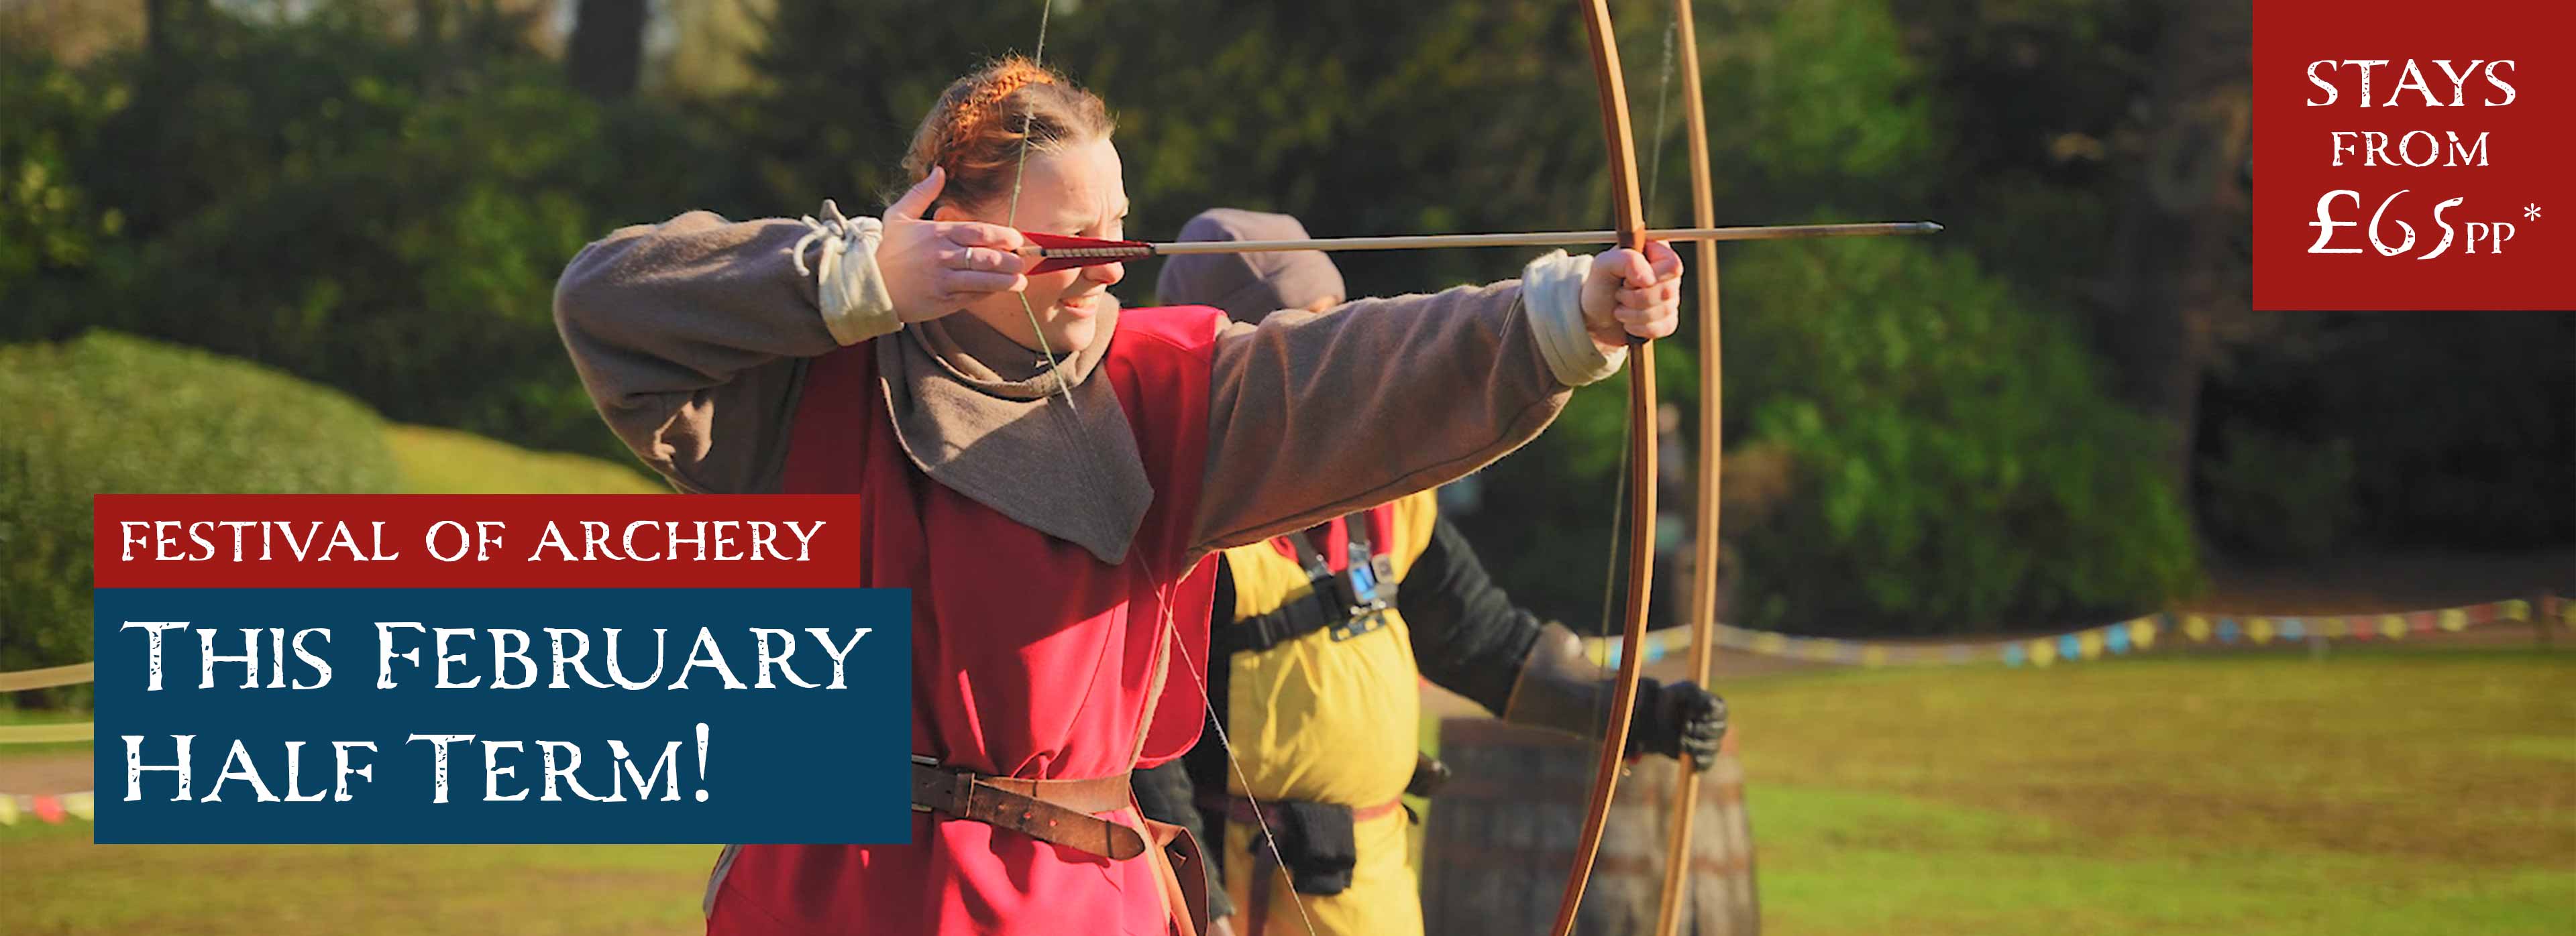 February Half Term Festical of Archery at Warwick Castle